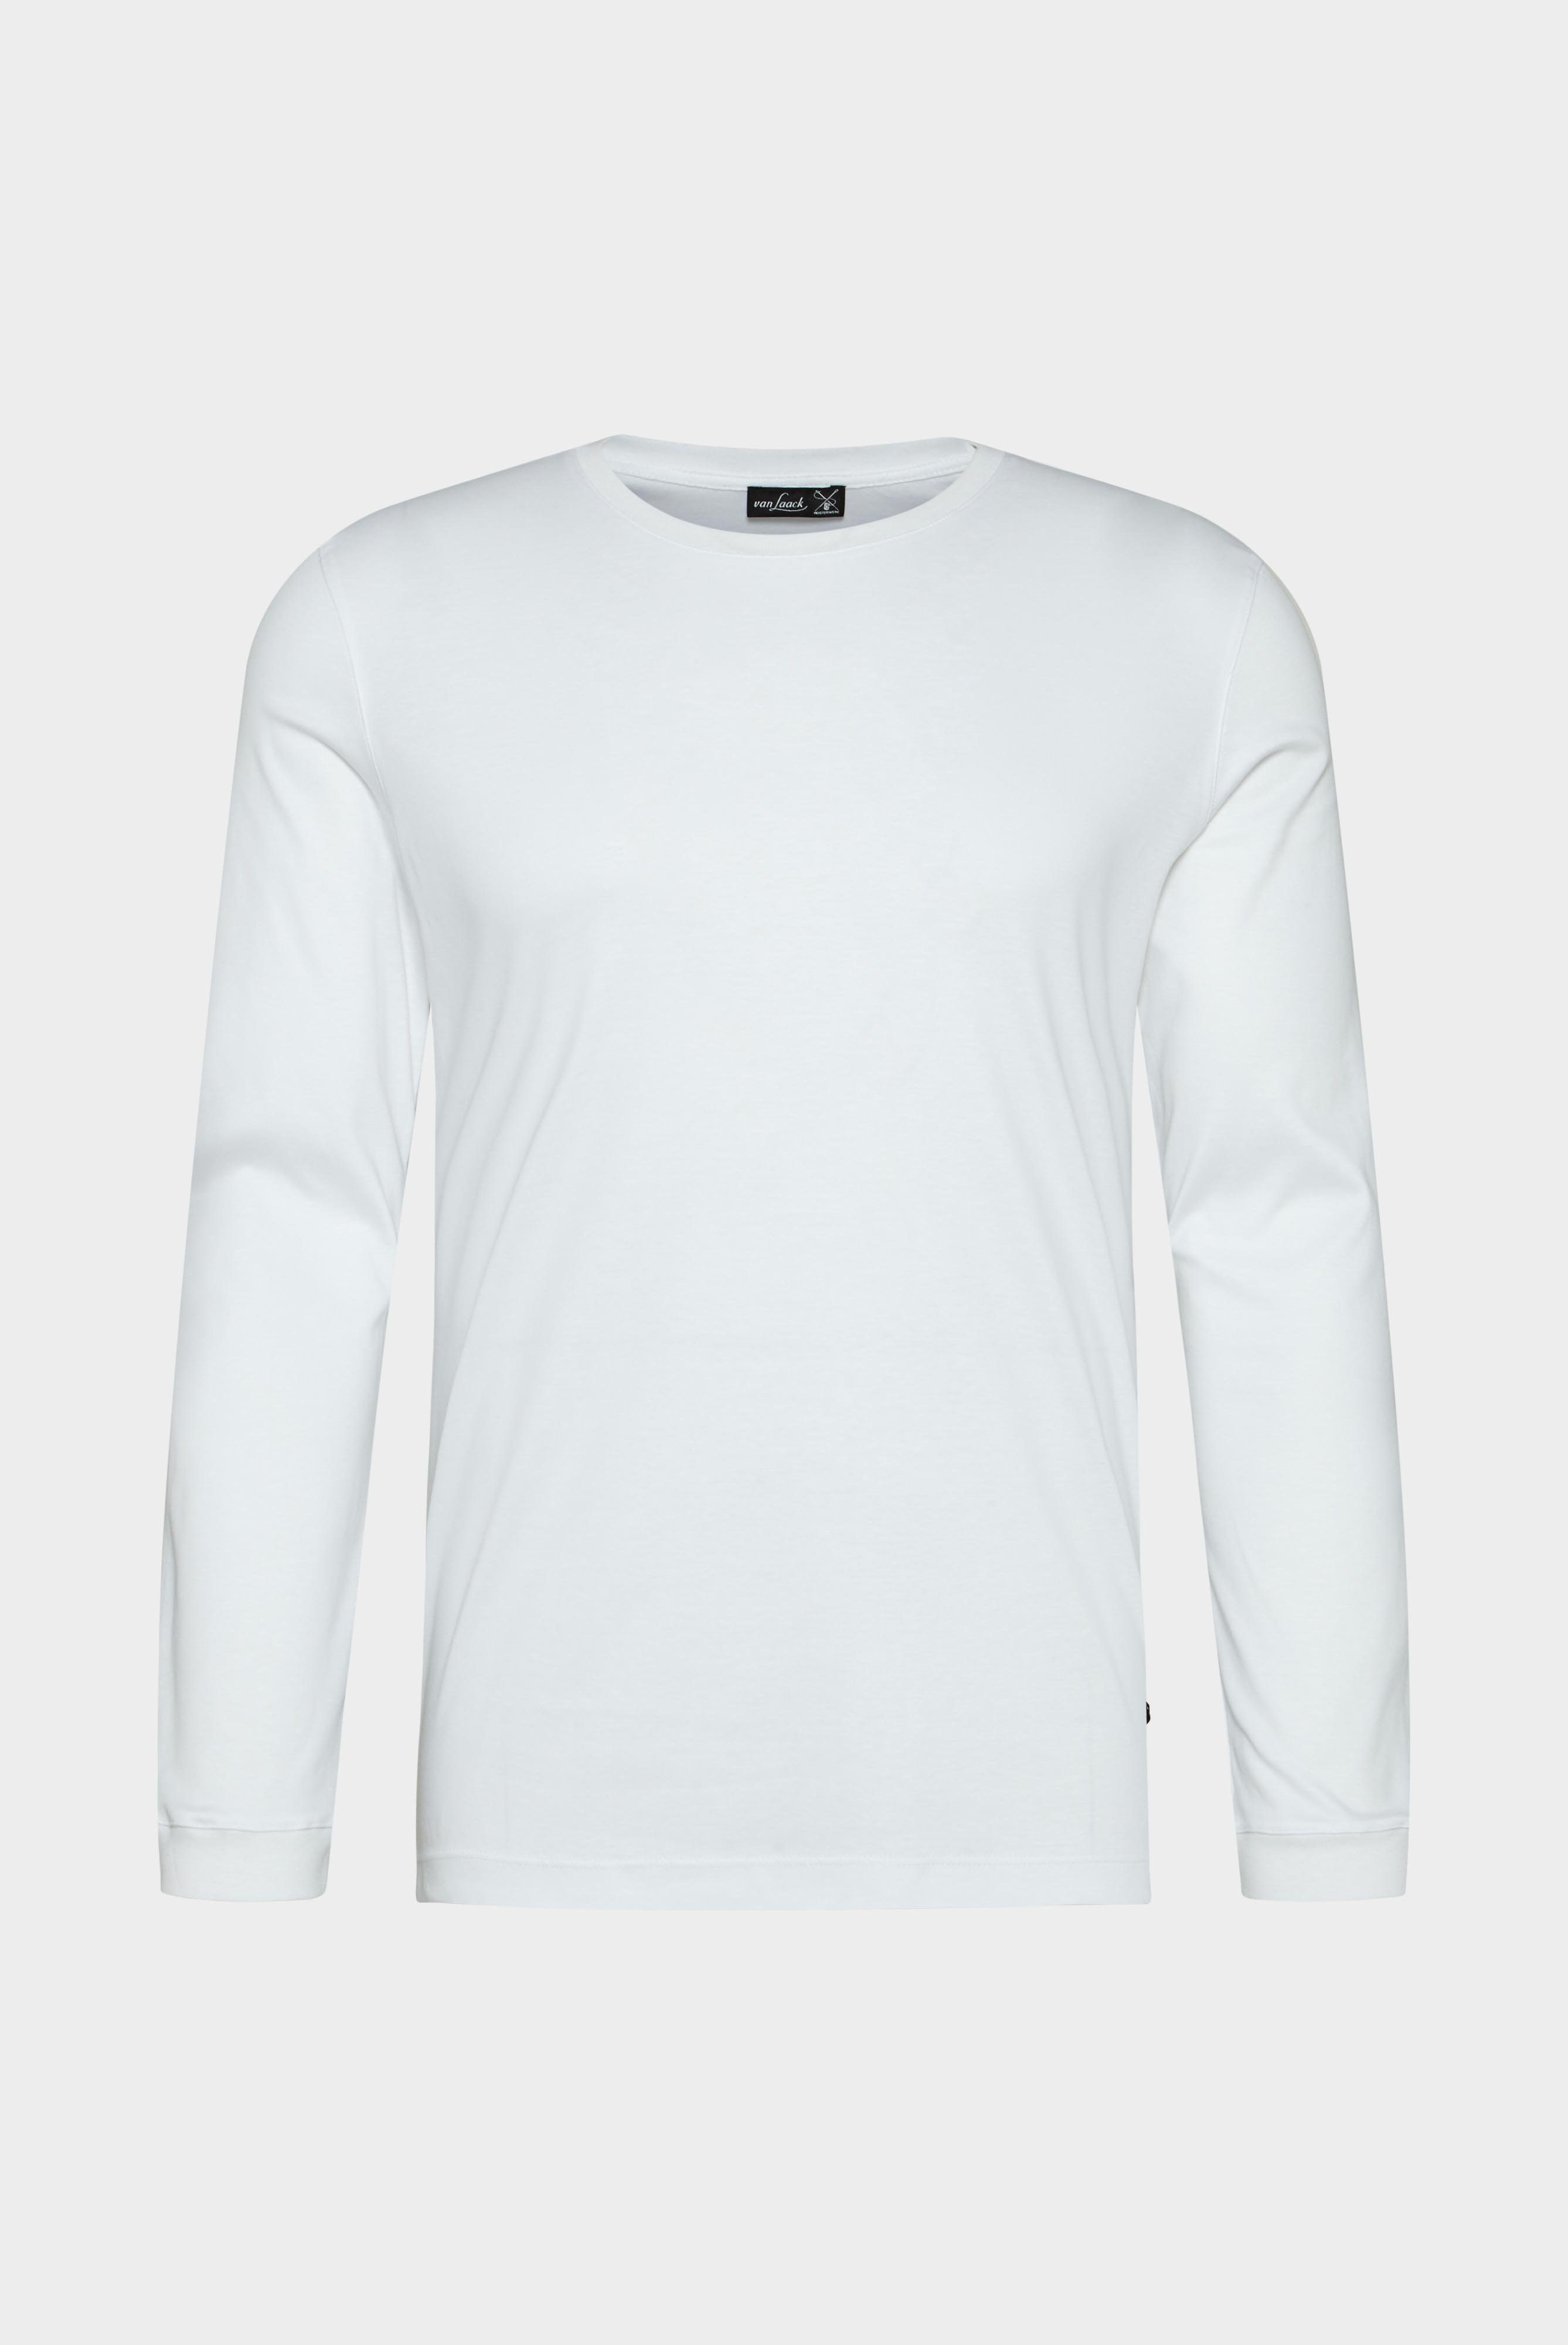 T-Shirts+Longsleeve Swiss Cotton Jersey Crew Neck T-Shirt+20.1718.UX.180031.000.X3L